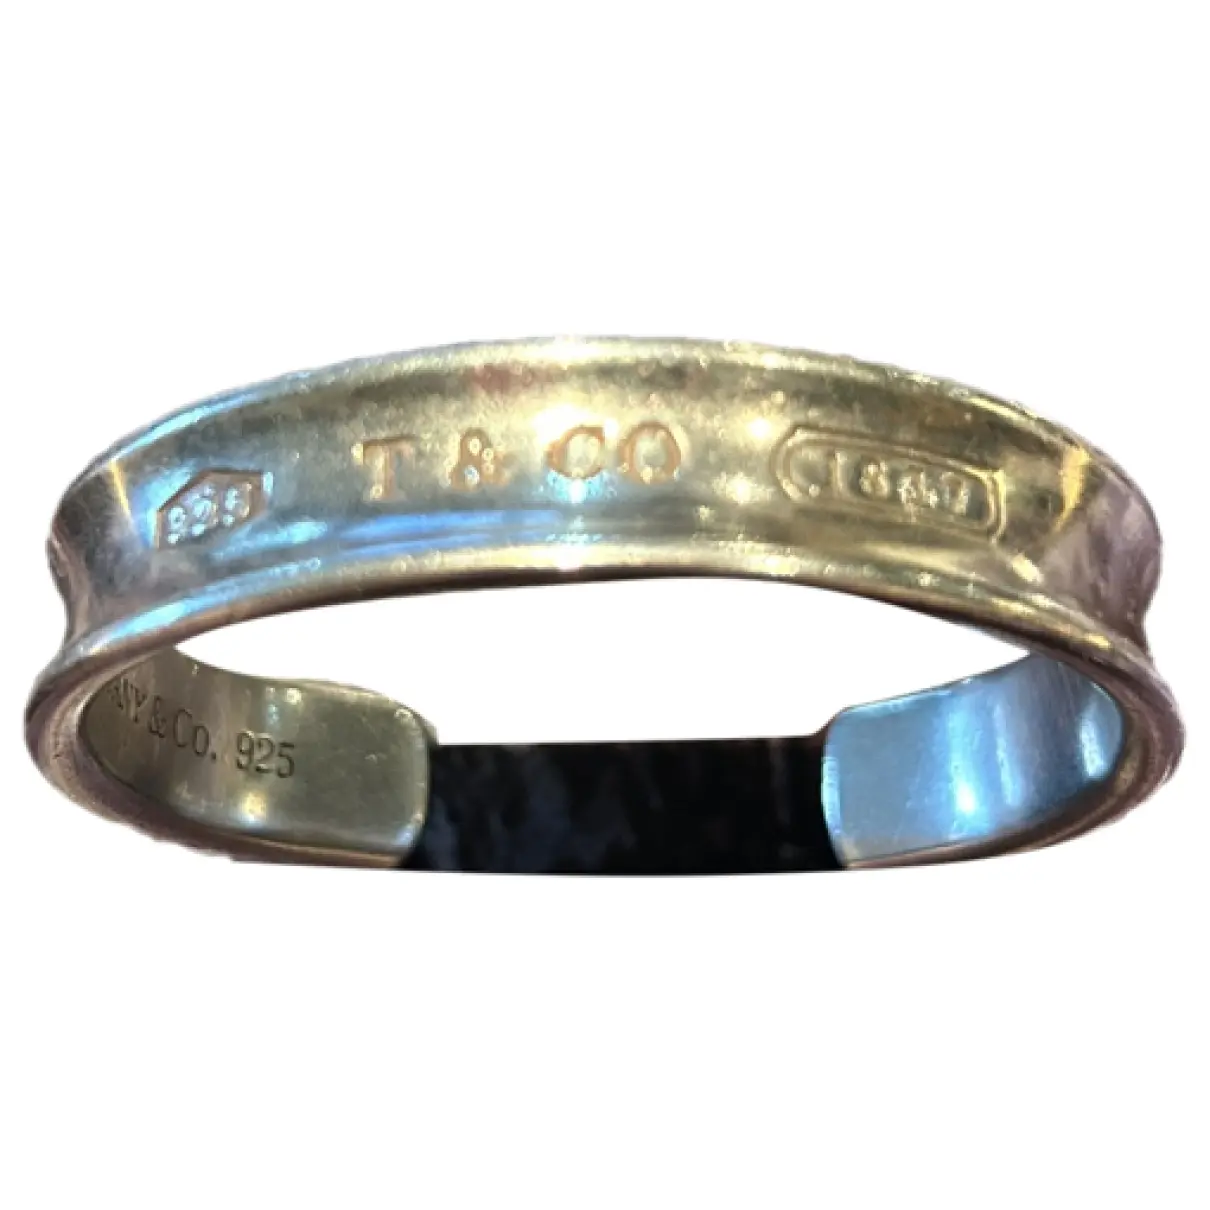 Return to Tiffany silver bracelet